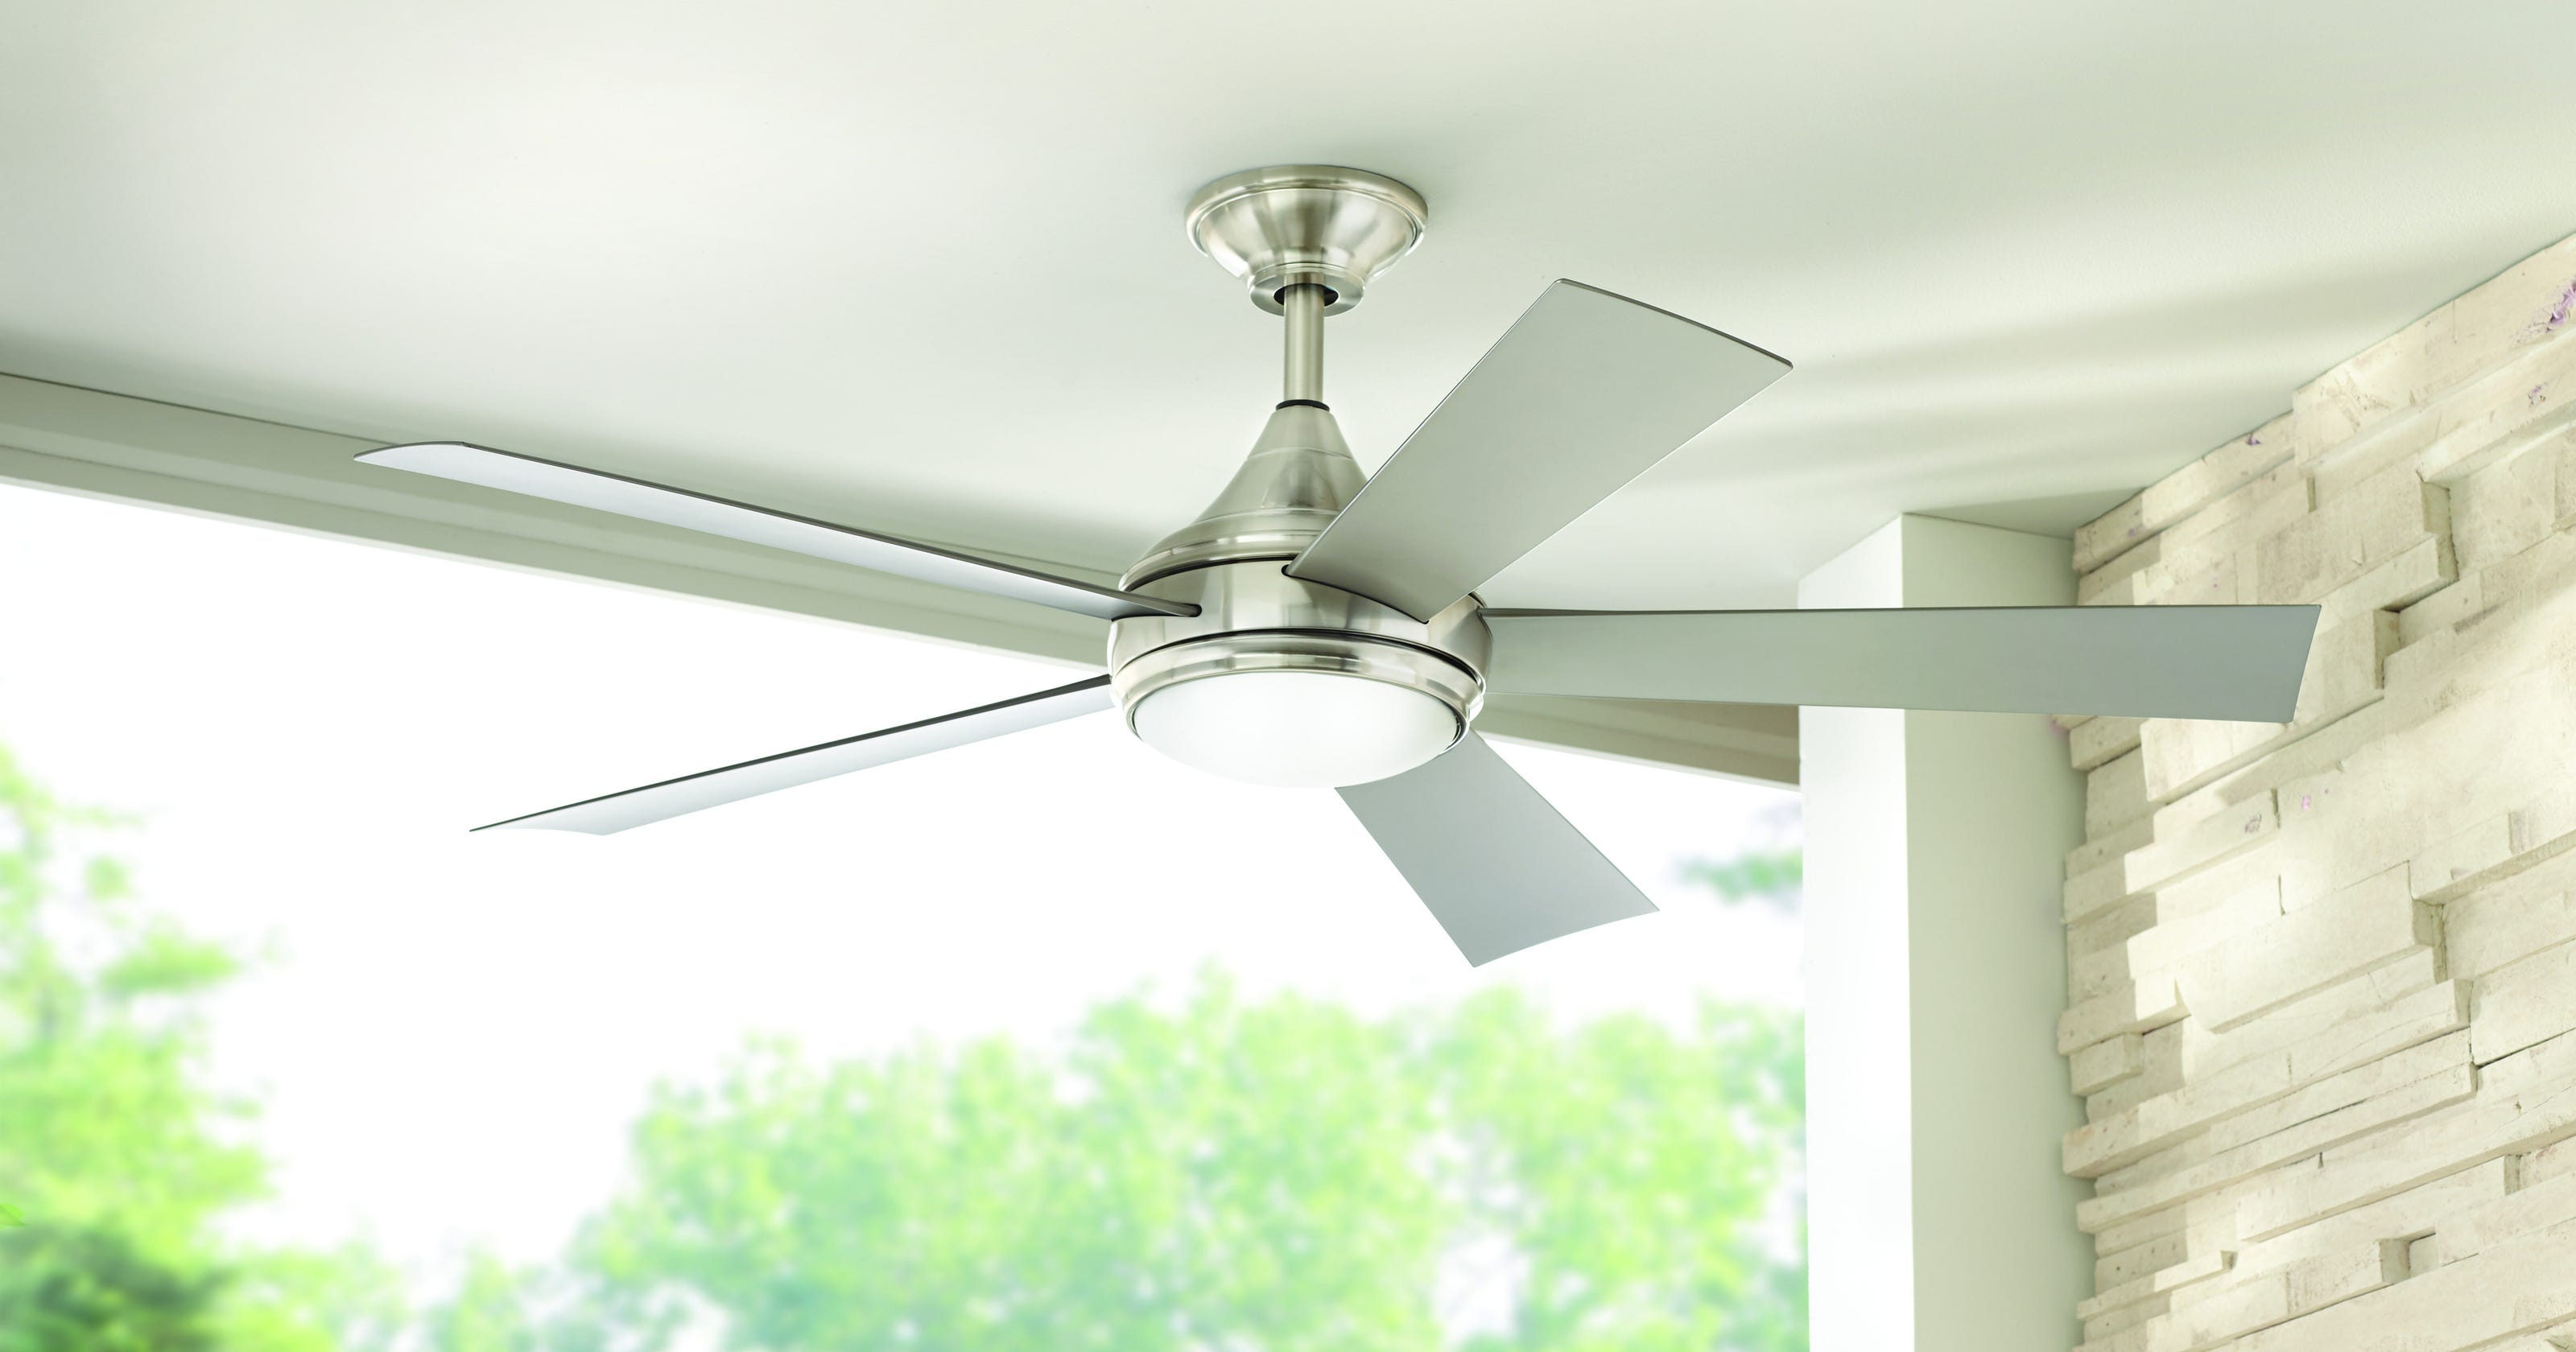 Matlow New Technology Makes Ceiling Fans A Breeze